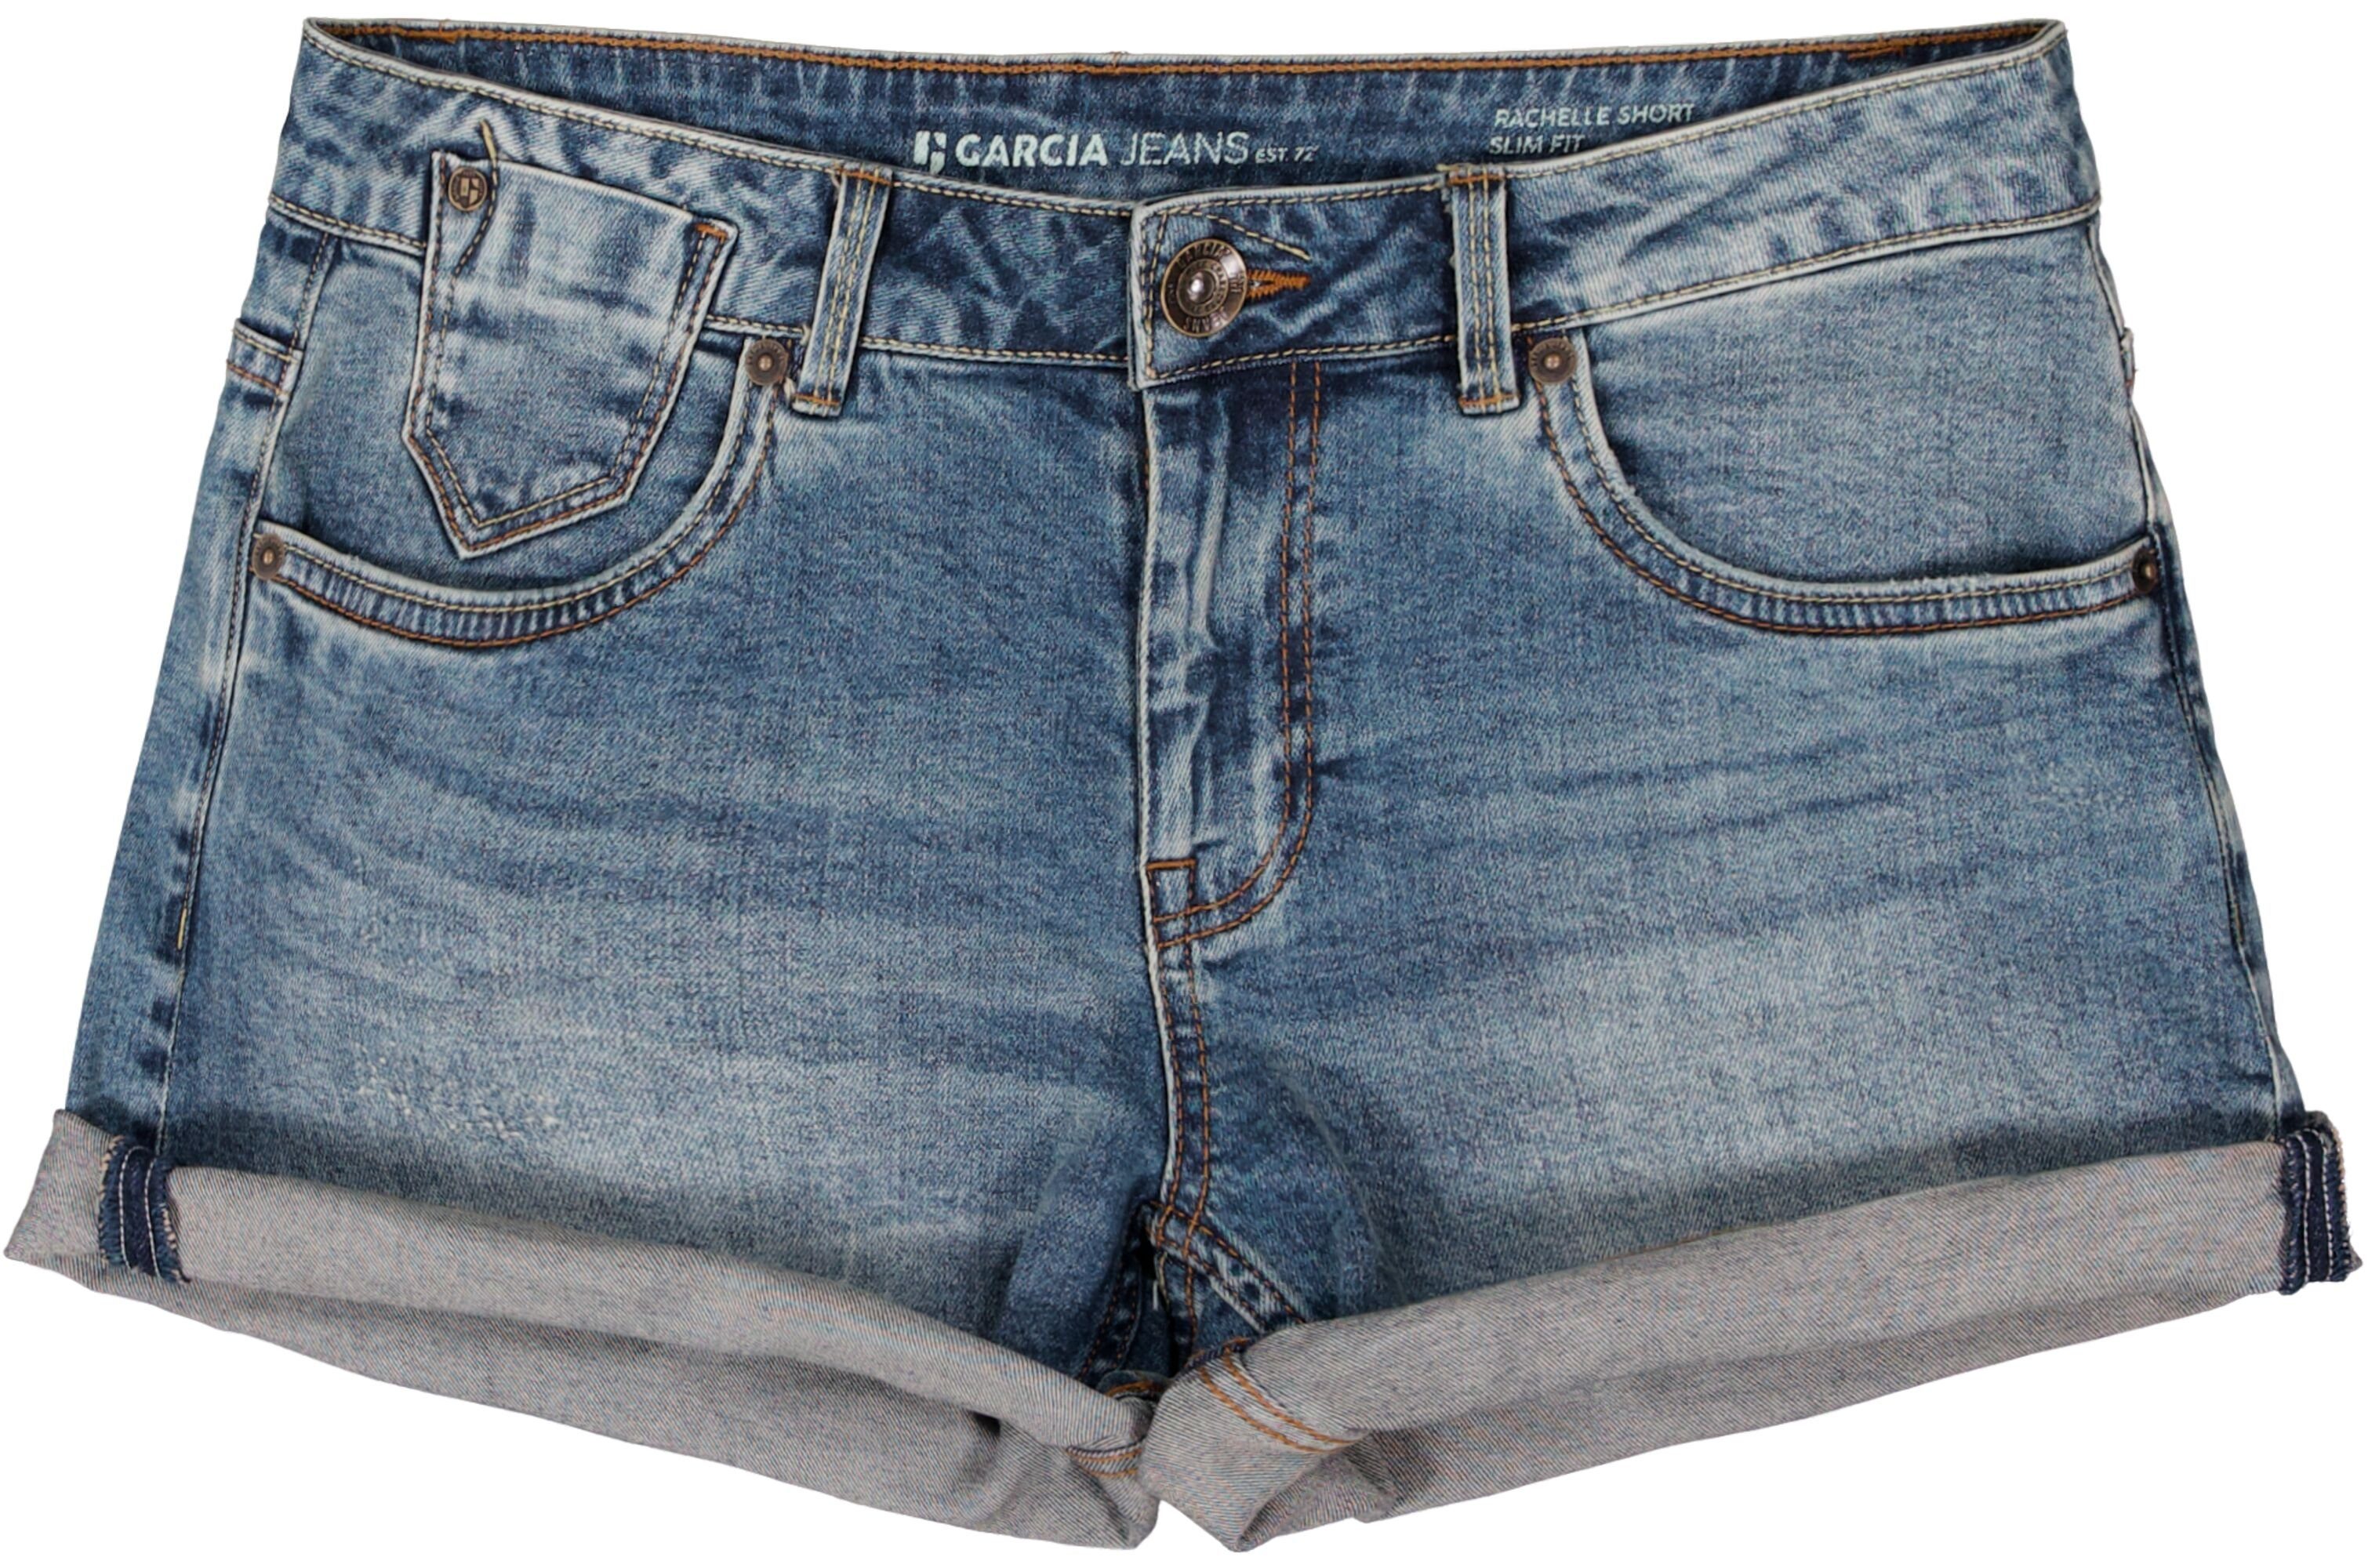 GARCIA JEANS Stretch-Jeans Denim SHORT used 274.5390 - GARCIA vintage Flow RACHELLE